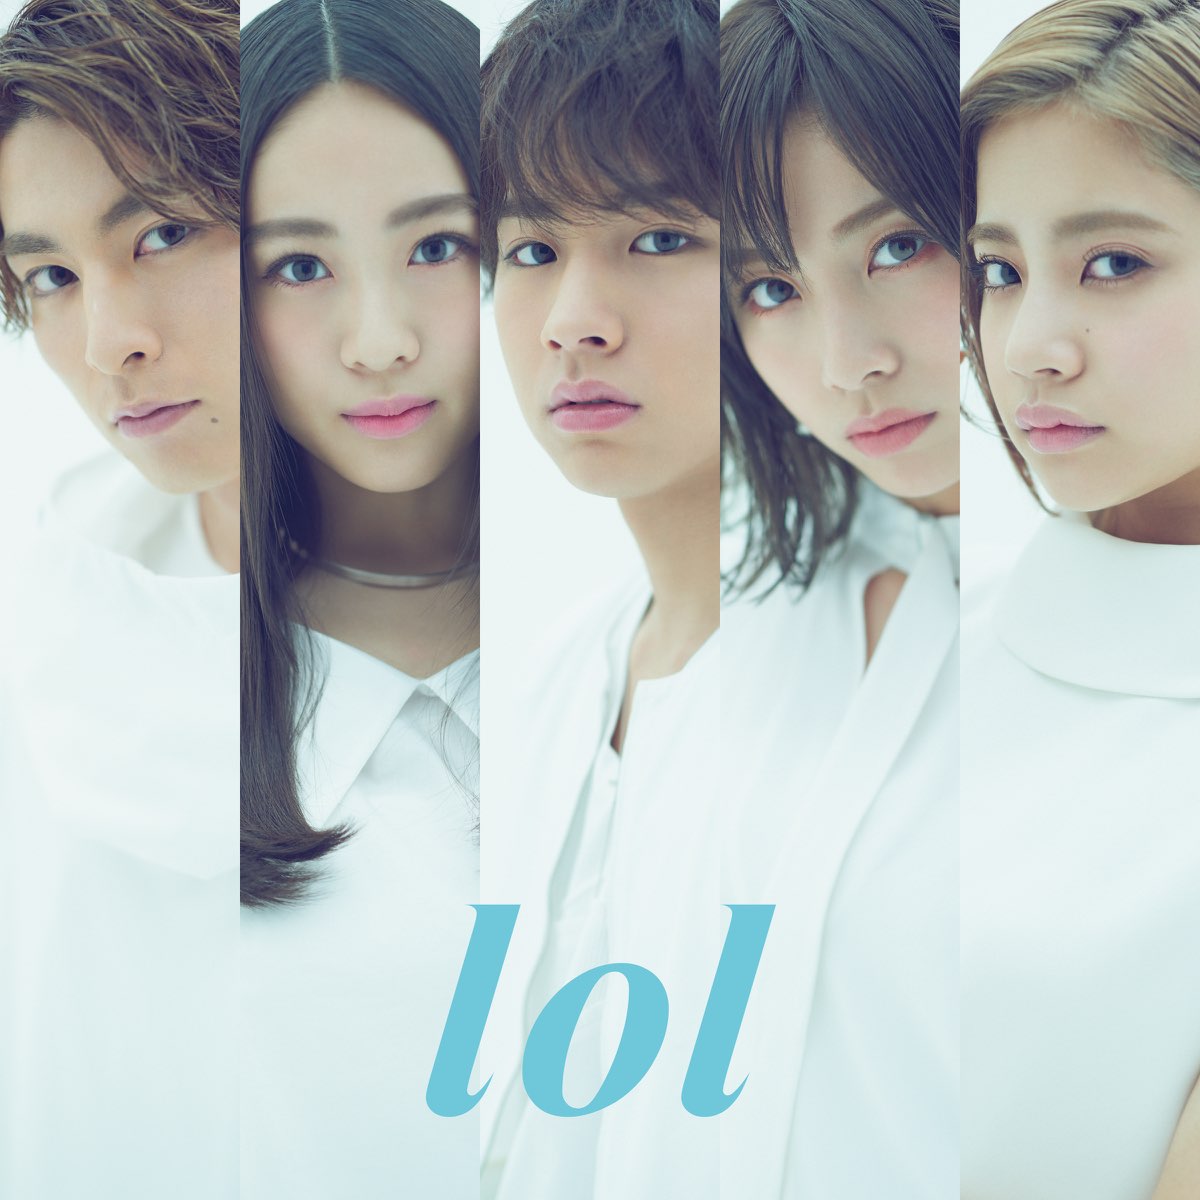 ice cream / ワスレナイ -special edition- - EP de lol en Apple Music